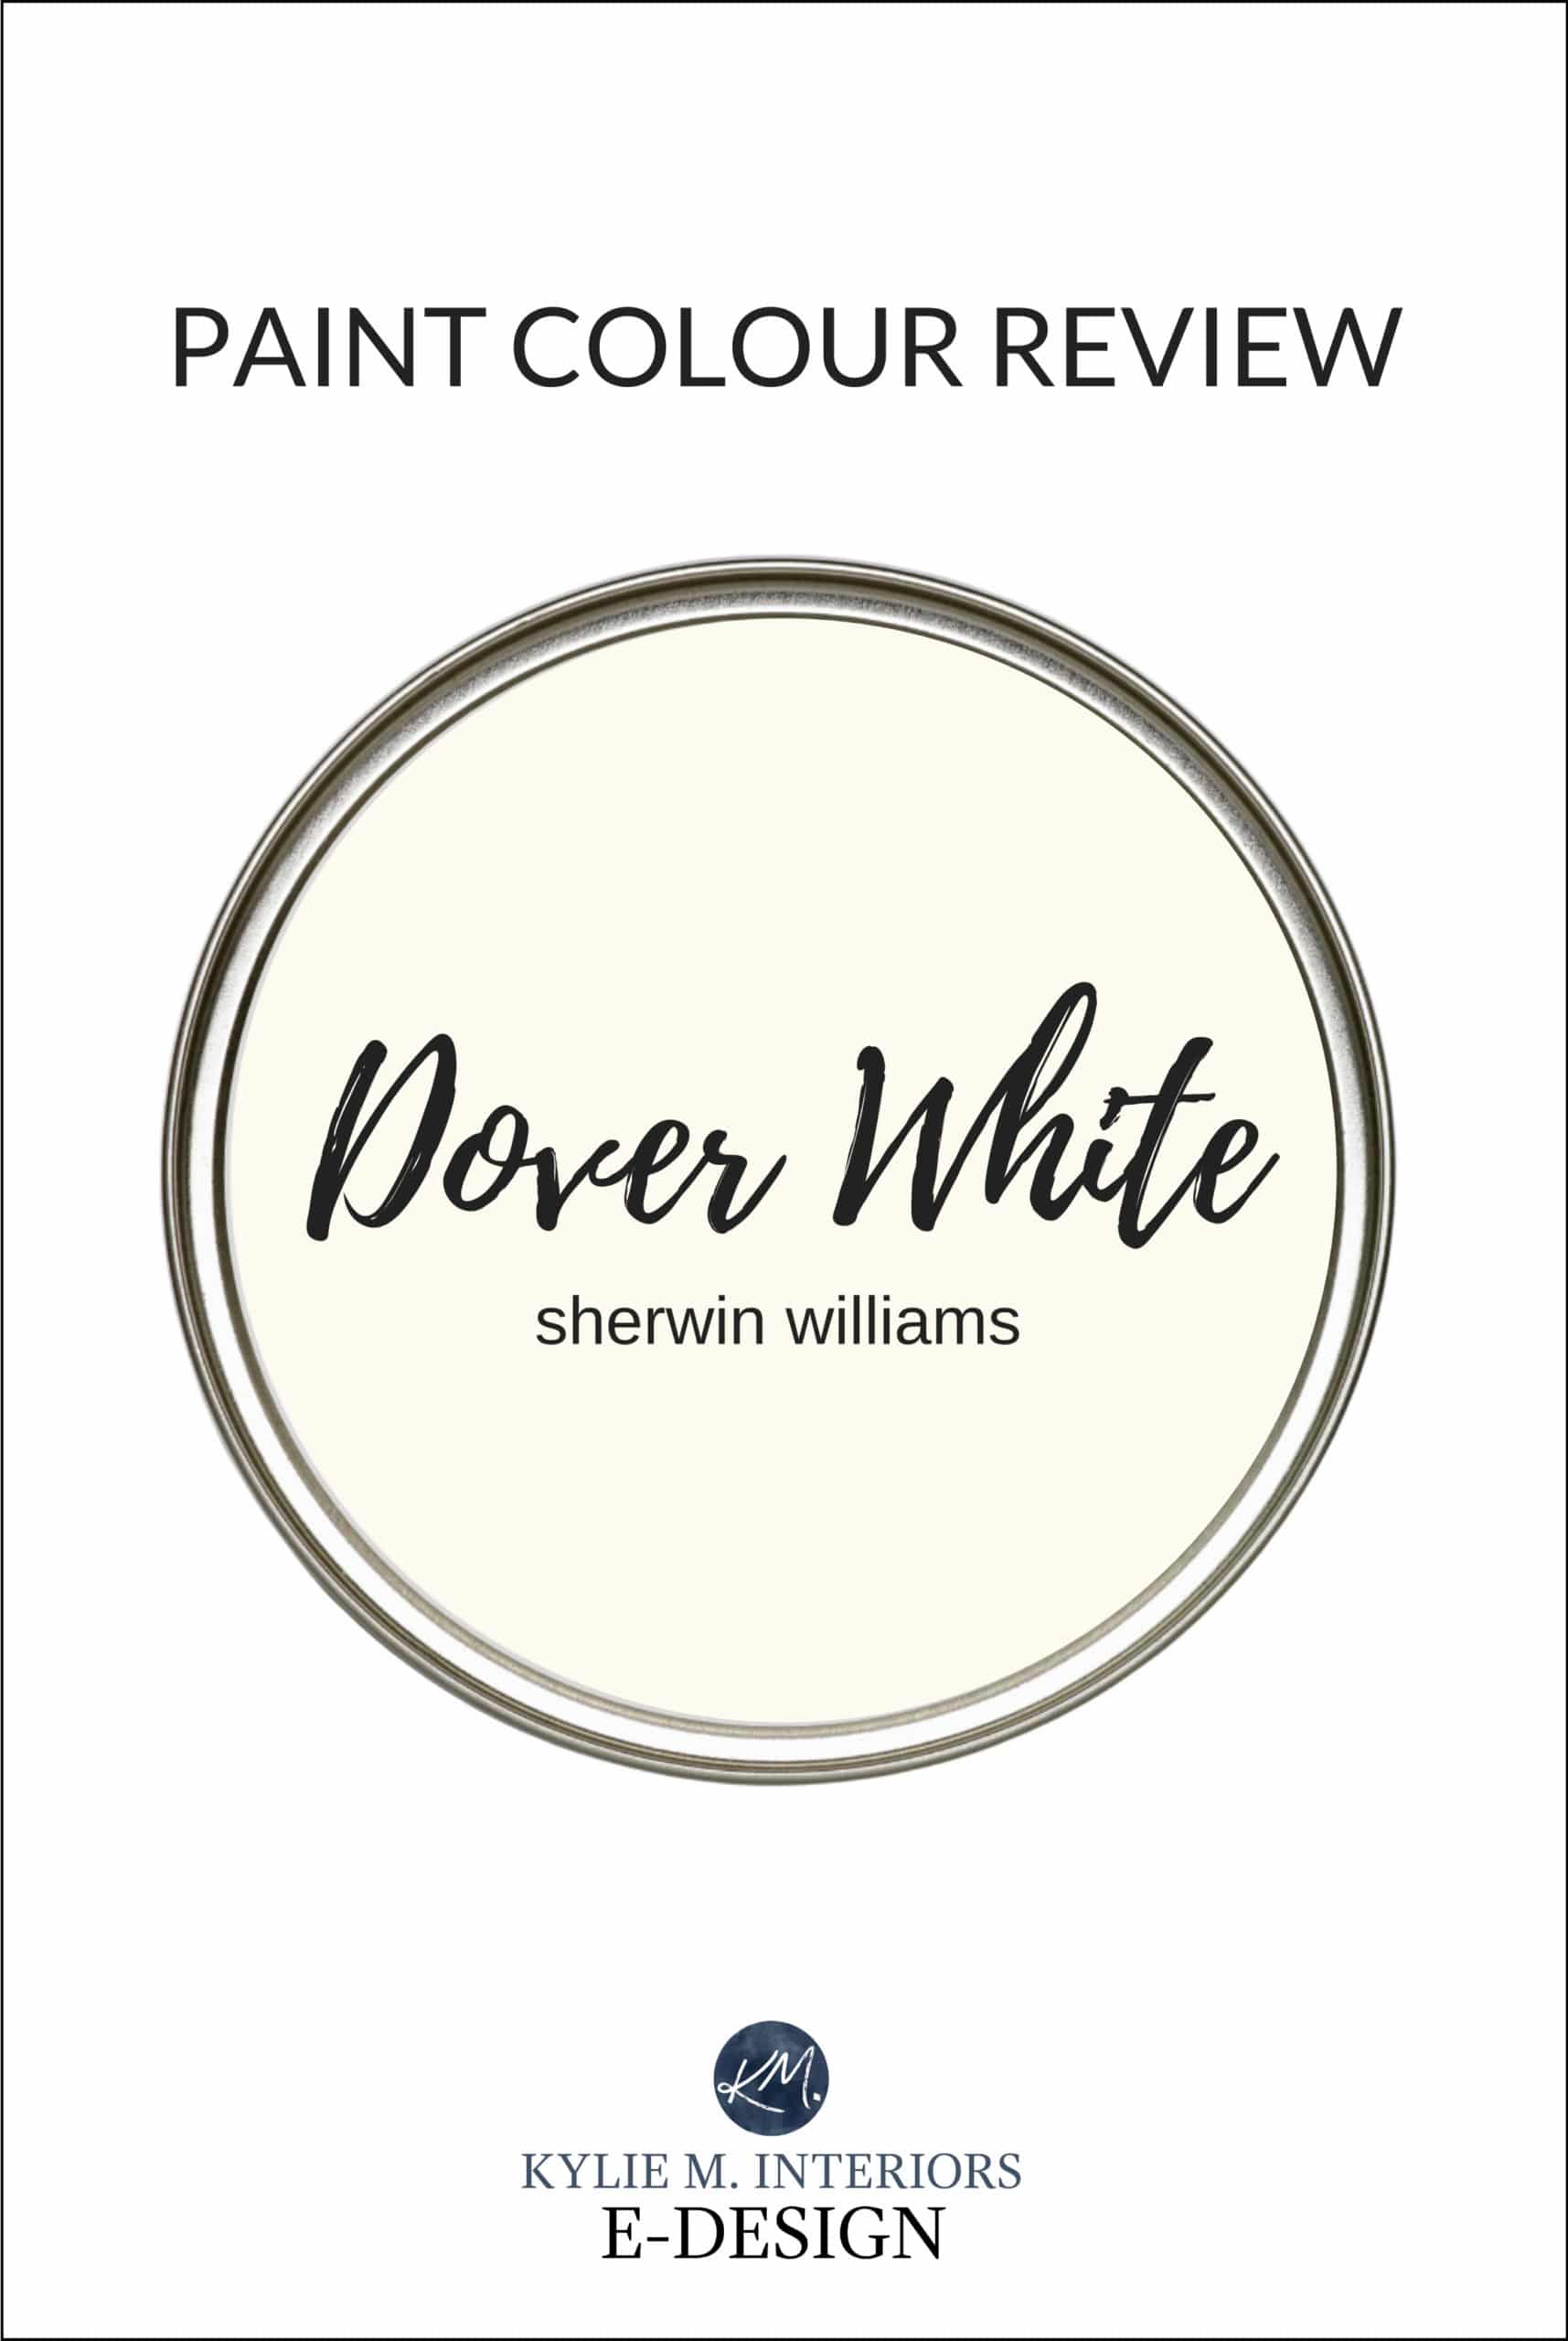 Paint colour review, best warm white creamy paint colour, Sherwin Williams Dover White. Kylie M Interiors Edesign, online paint colour expert and diy decorating blogger